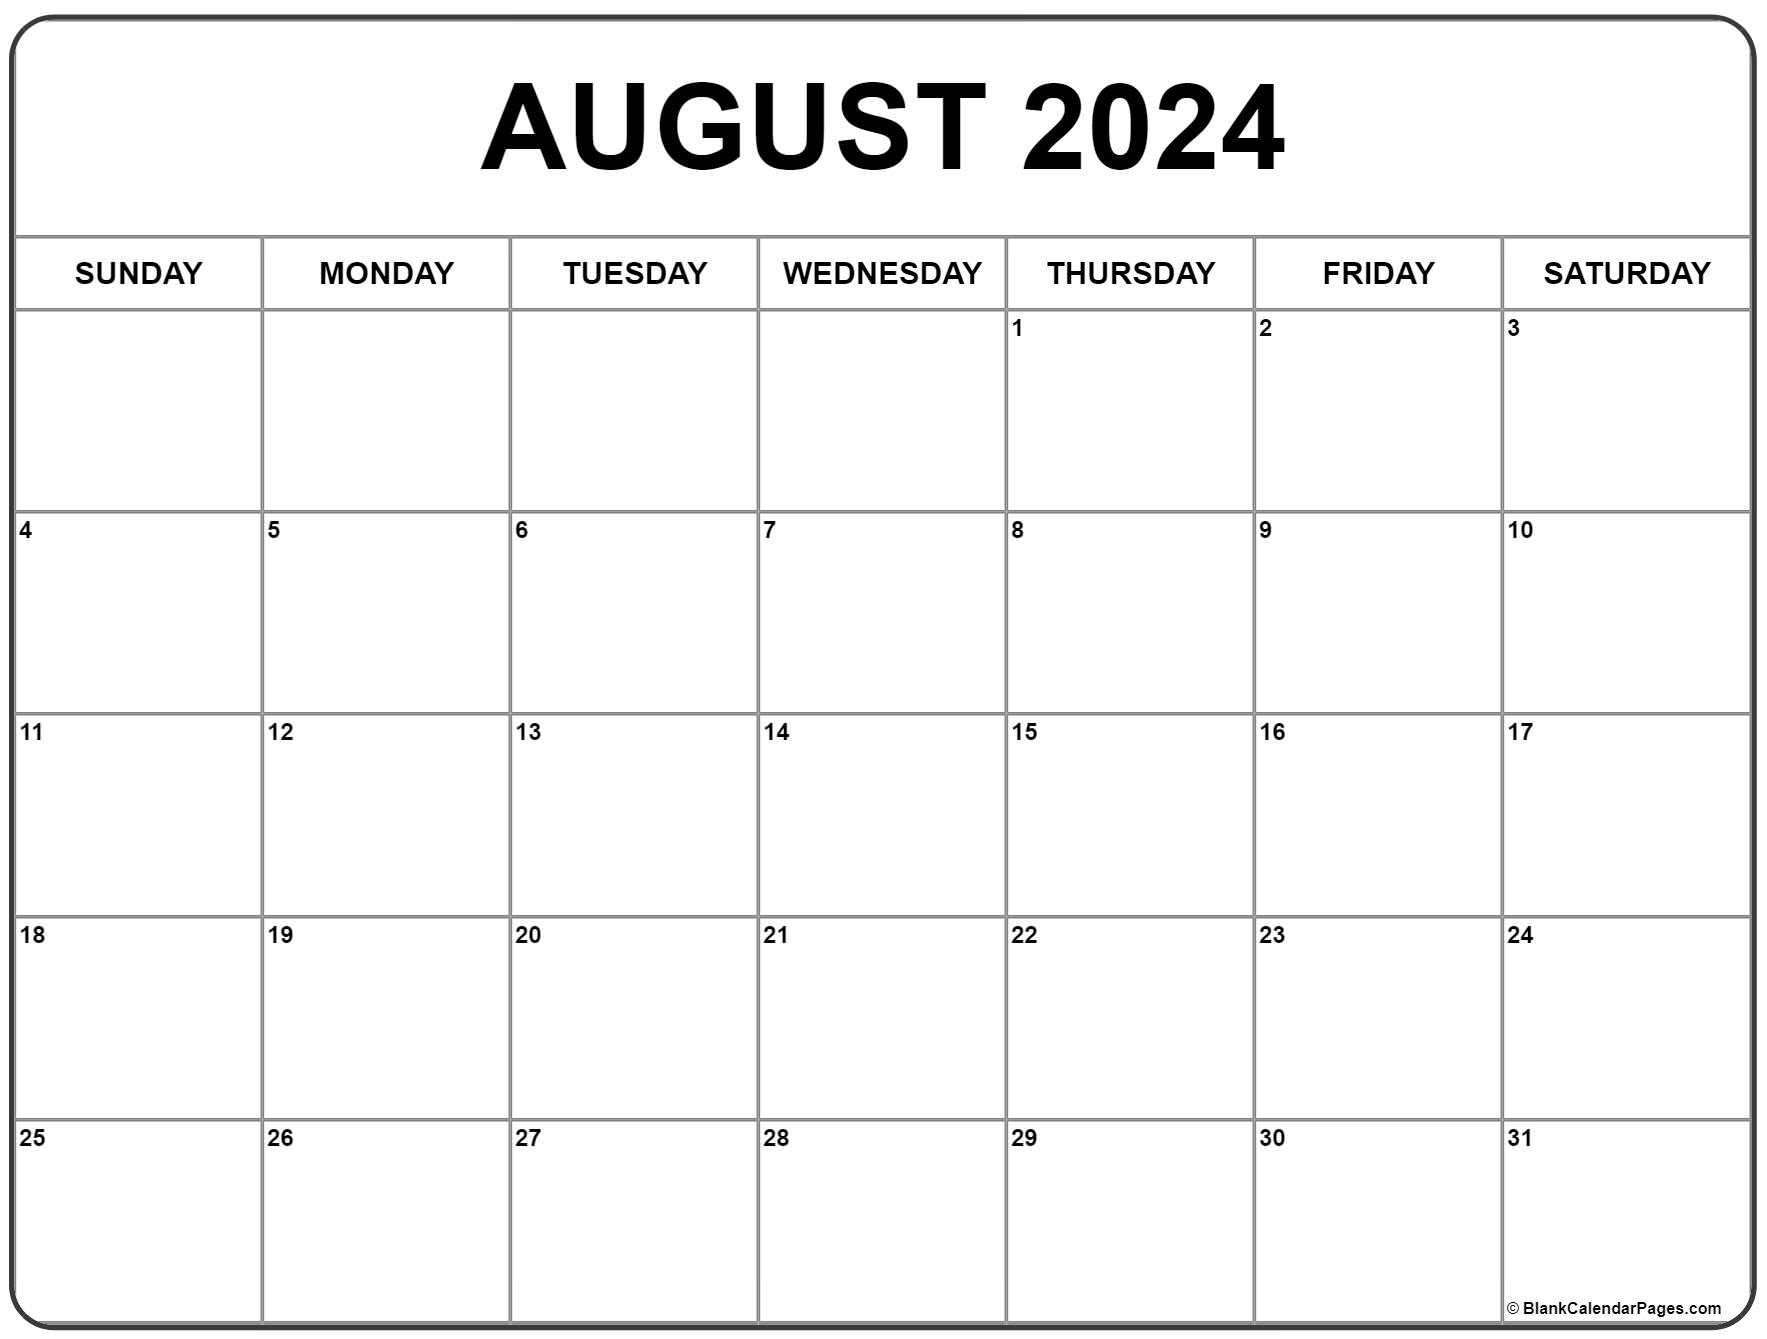 August 2024 Calendar | Free Printable Calendar for August 2024 Printable Calendar Free